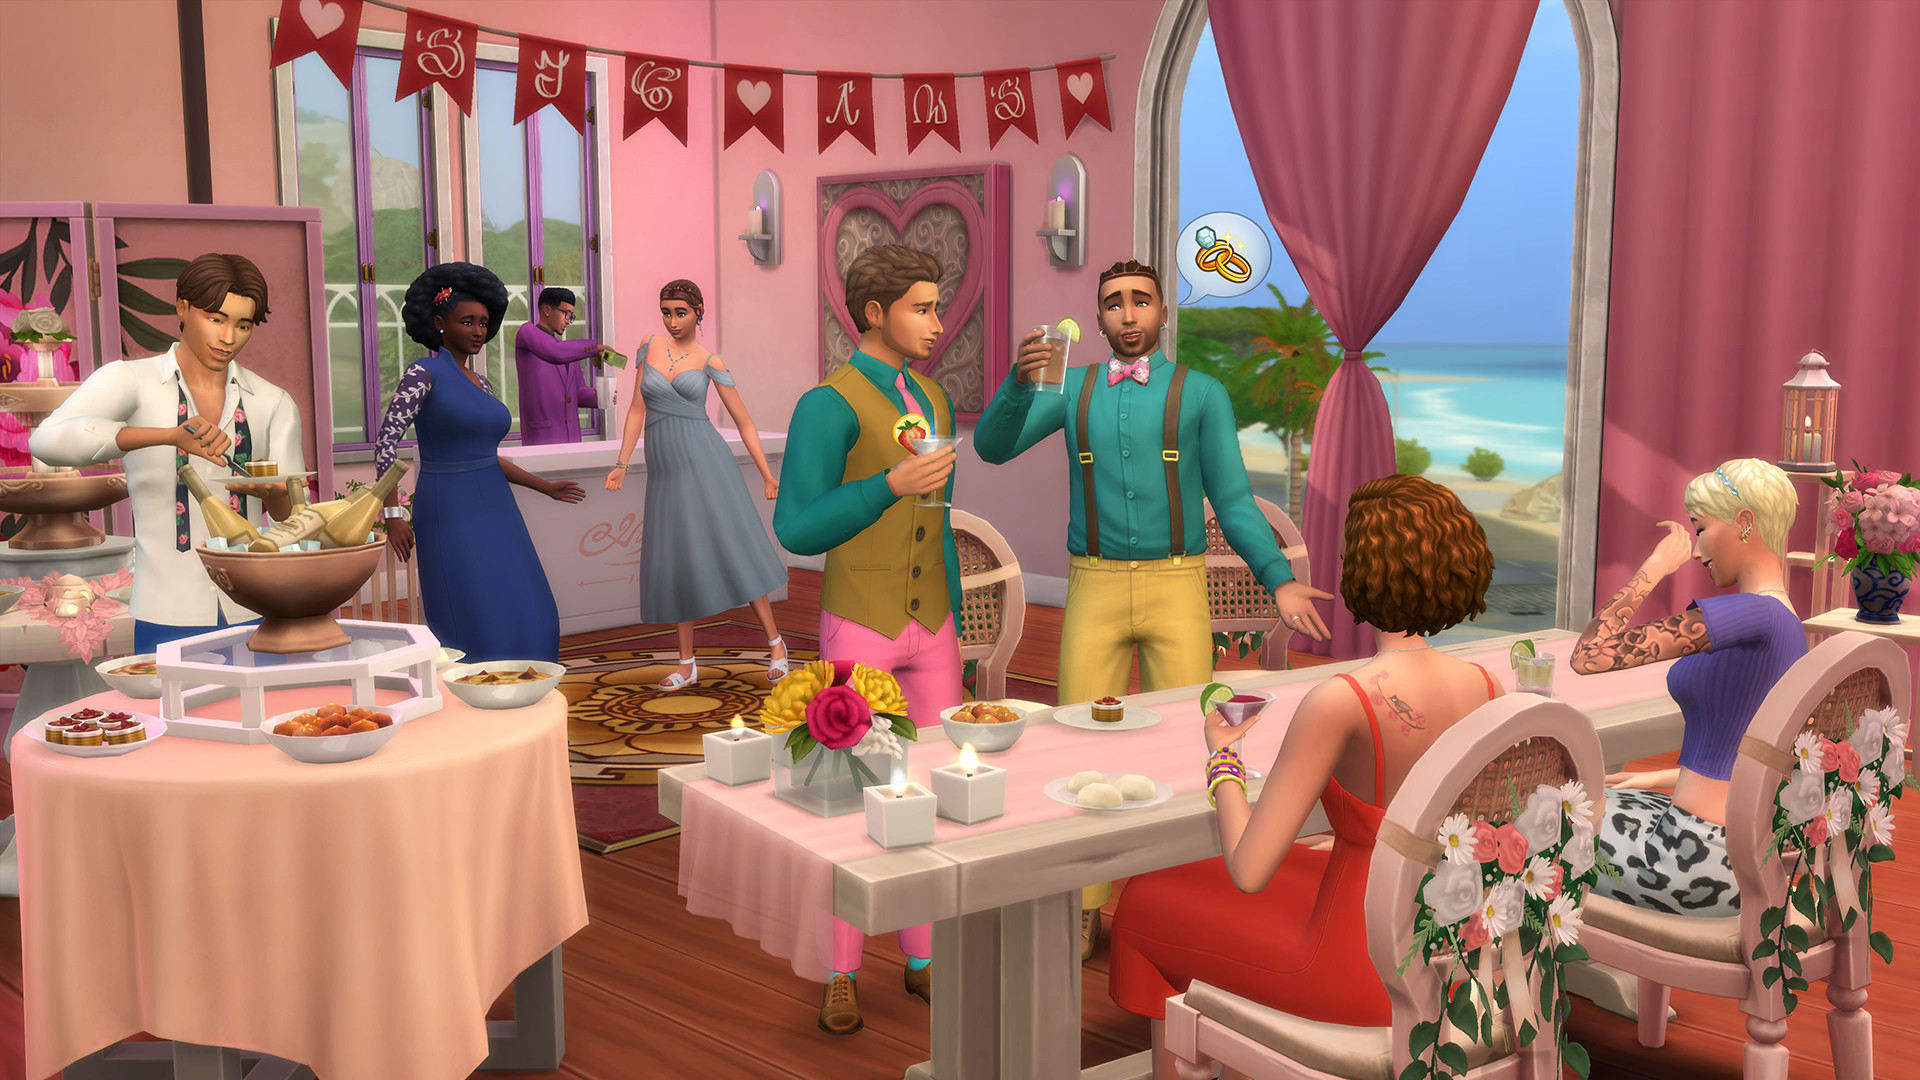 The Sims 4 - My Wedding Stories Game Pack DLC Origin CD Key, $18.07